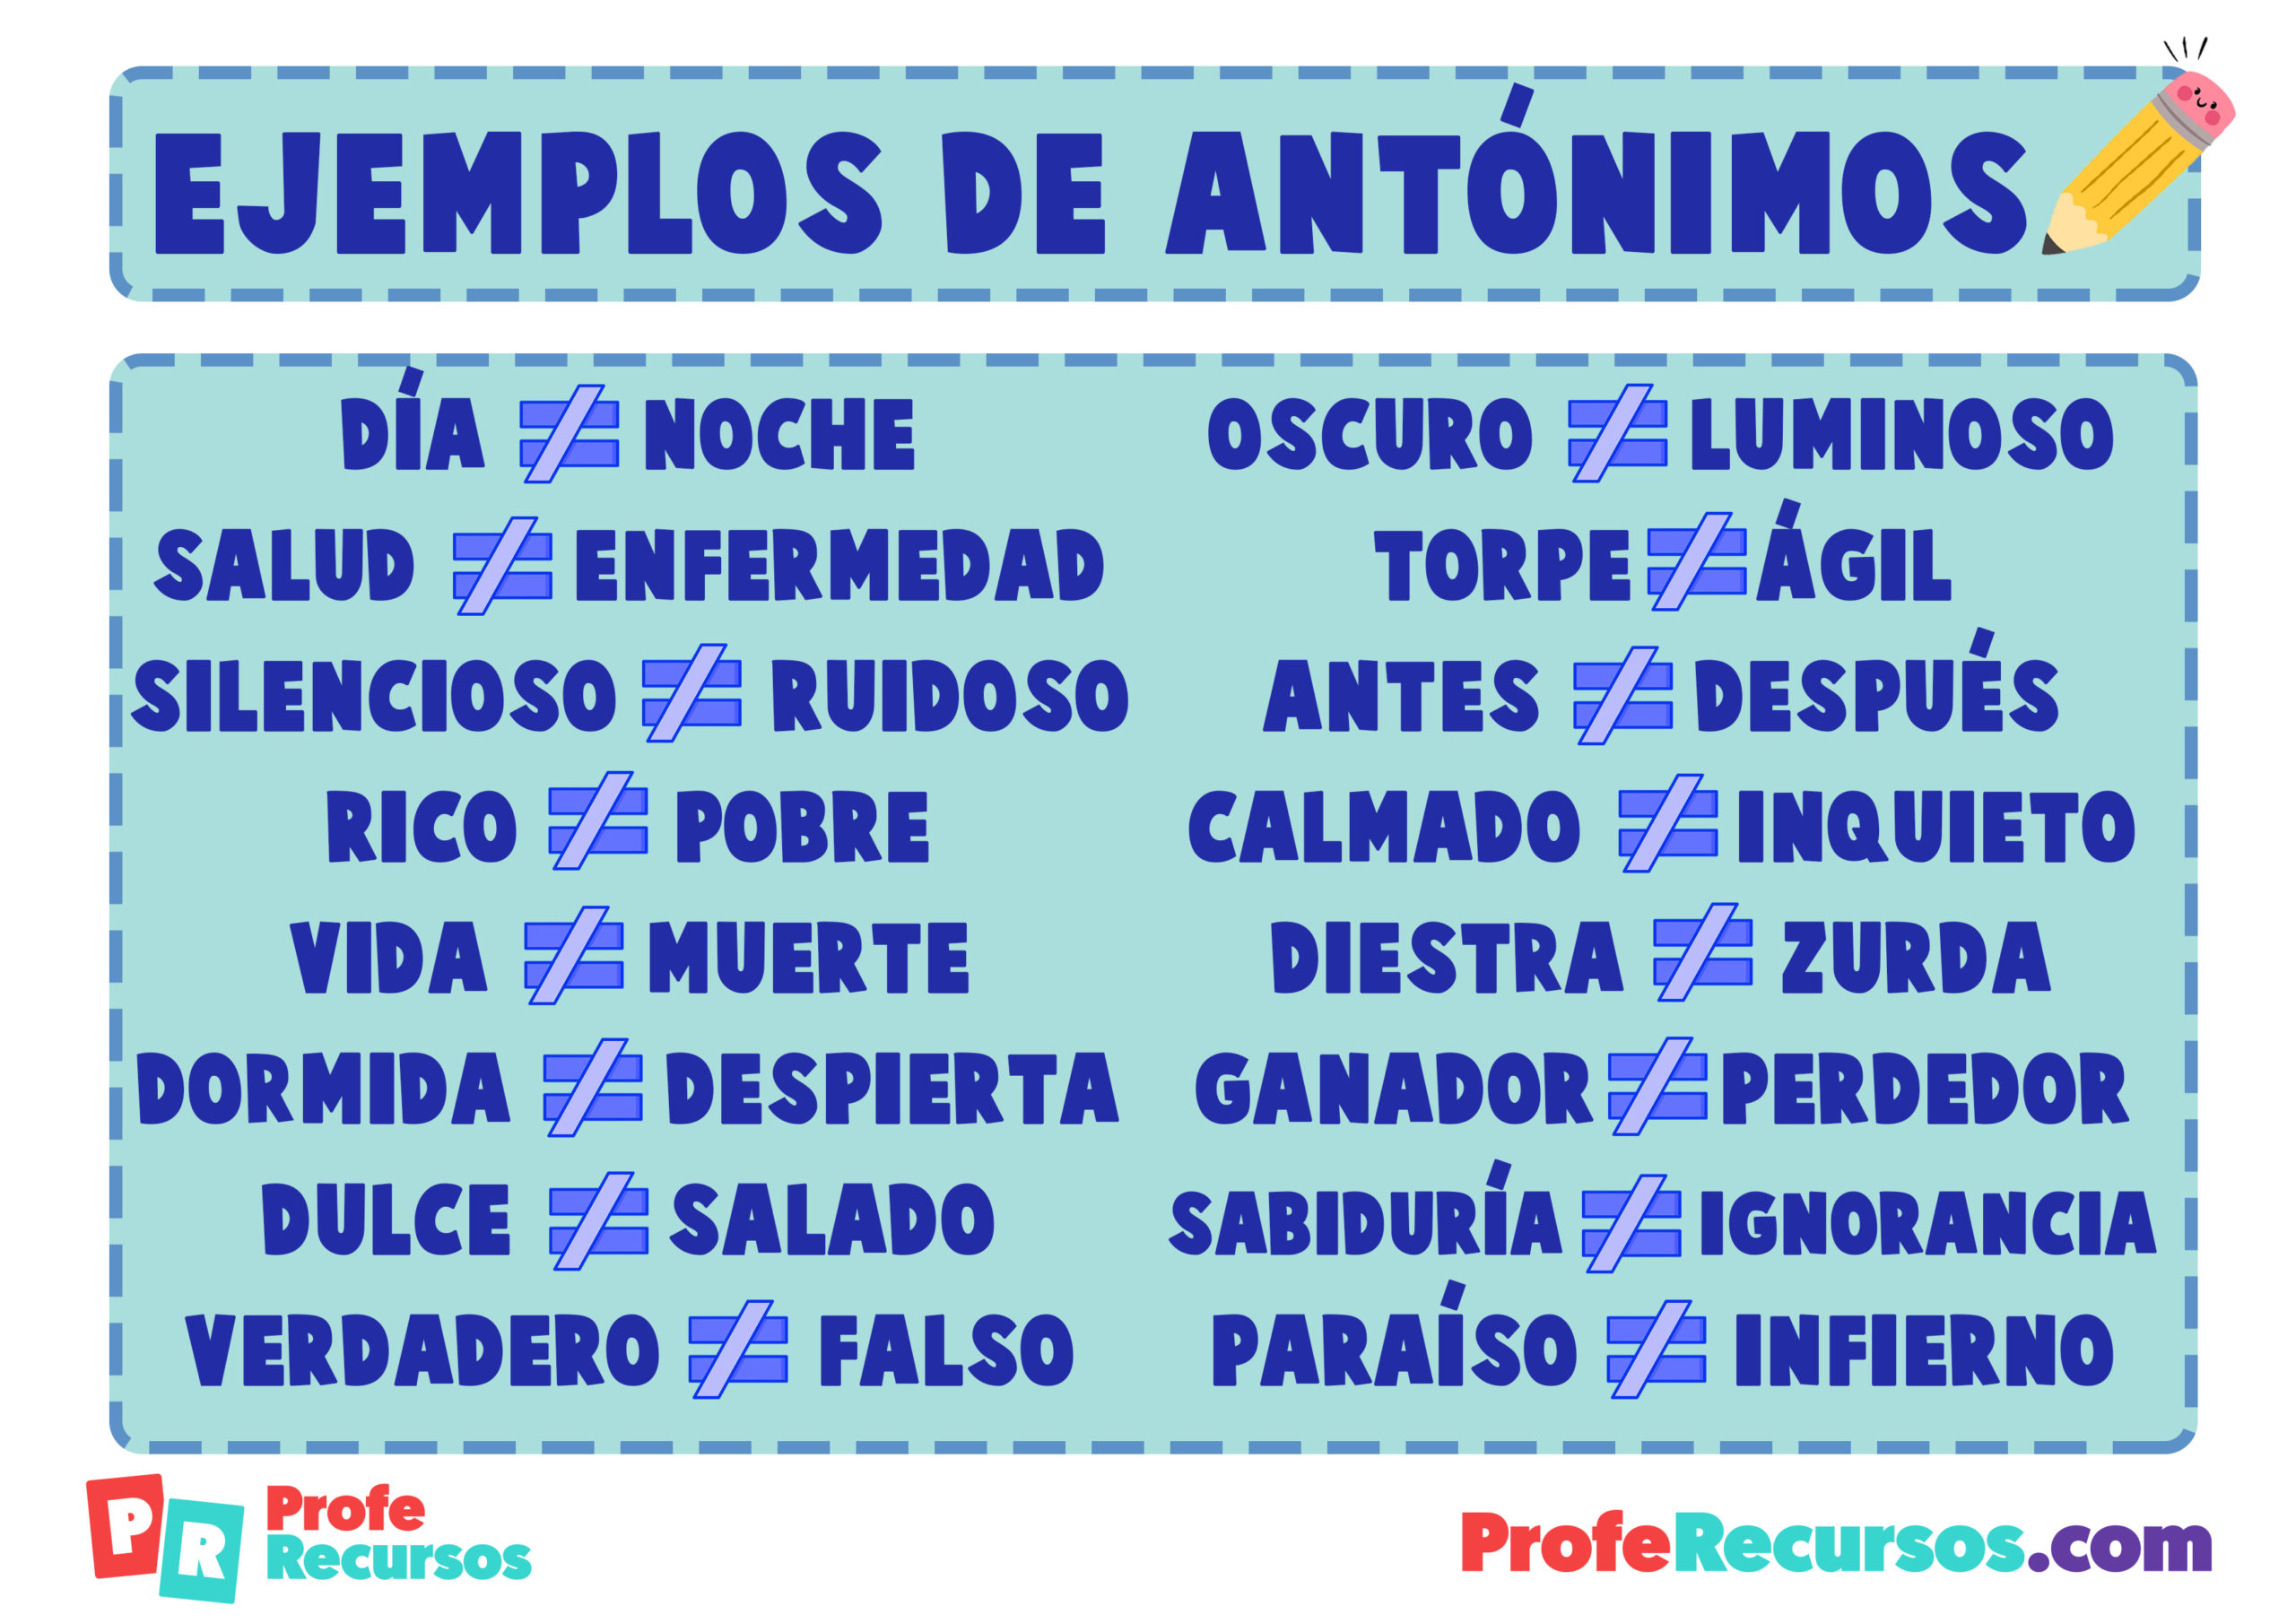 Antonimos5